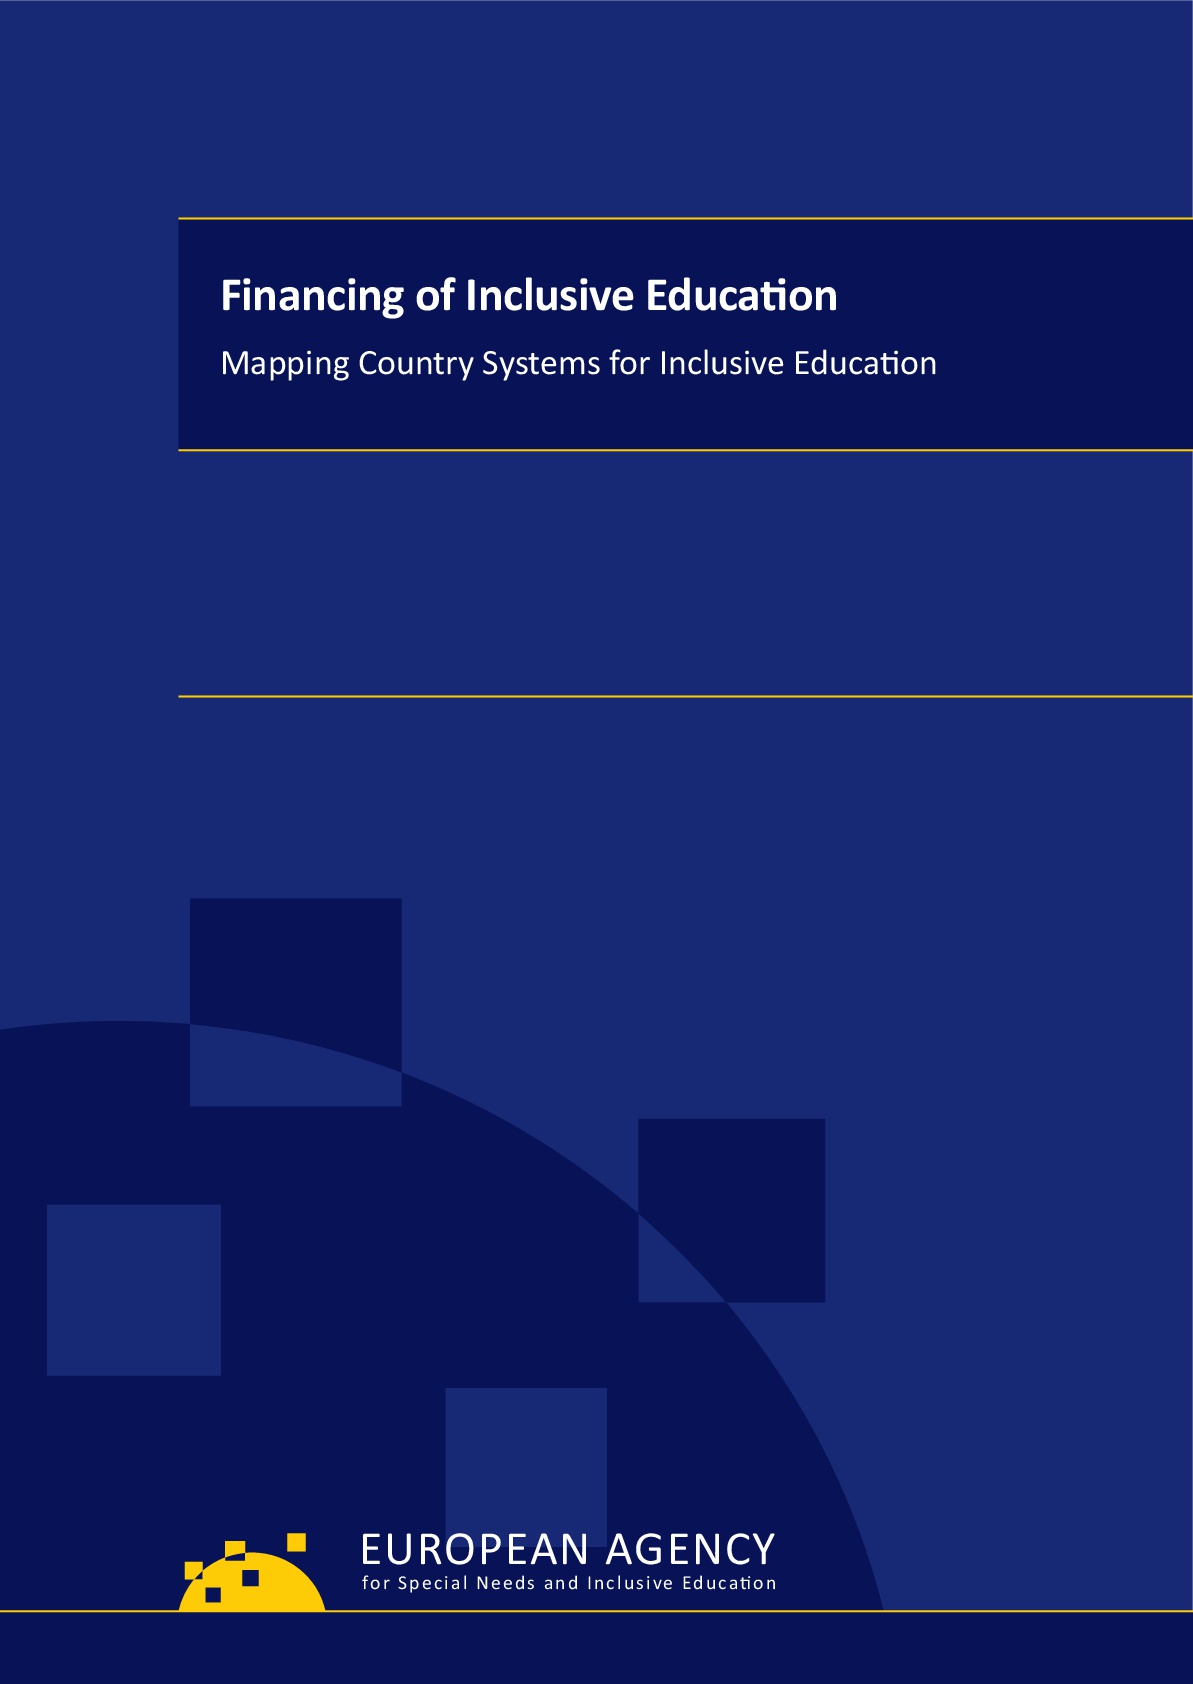 12. Financing_of_Inclusive_Education_EN-1-1-001